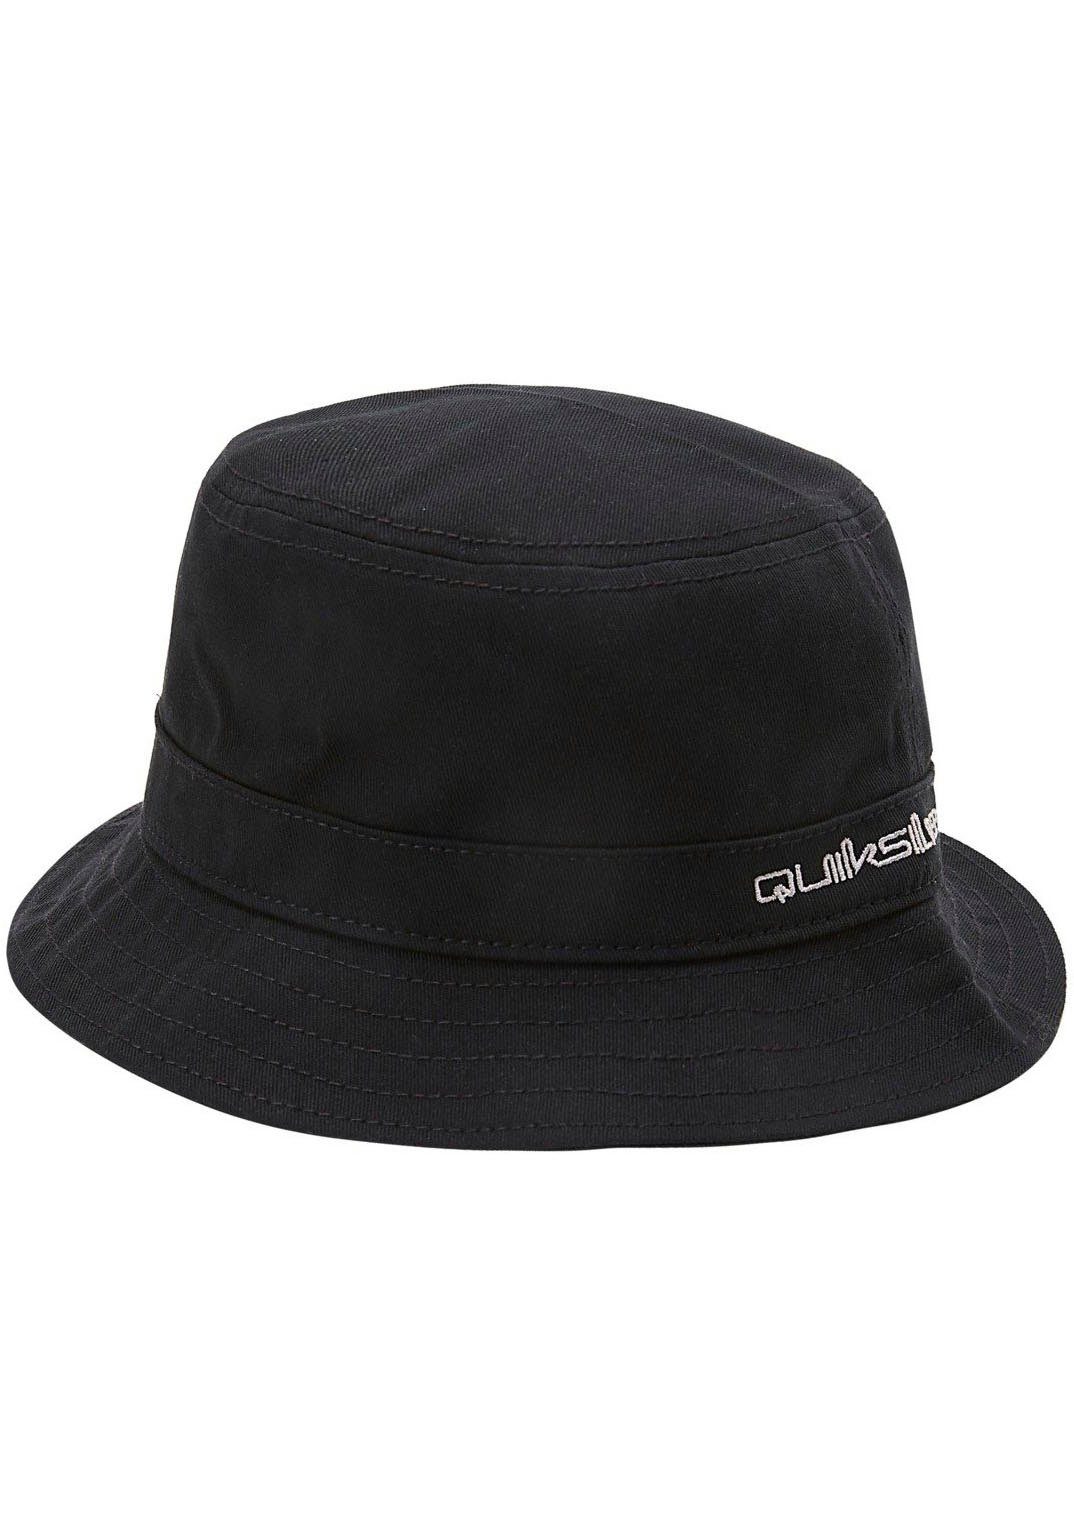 Quiksilver Sonnenhut Herren Fischerhut Black Hat Bucket